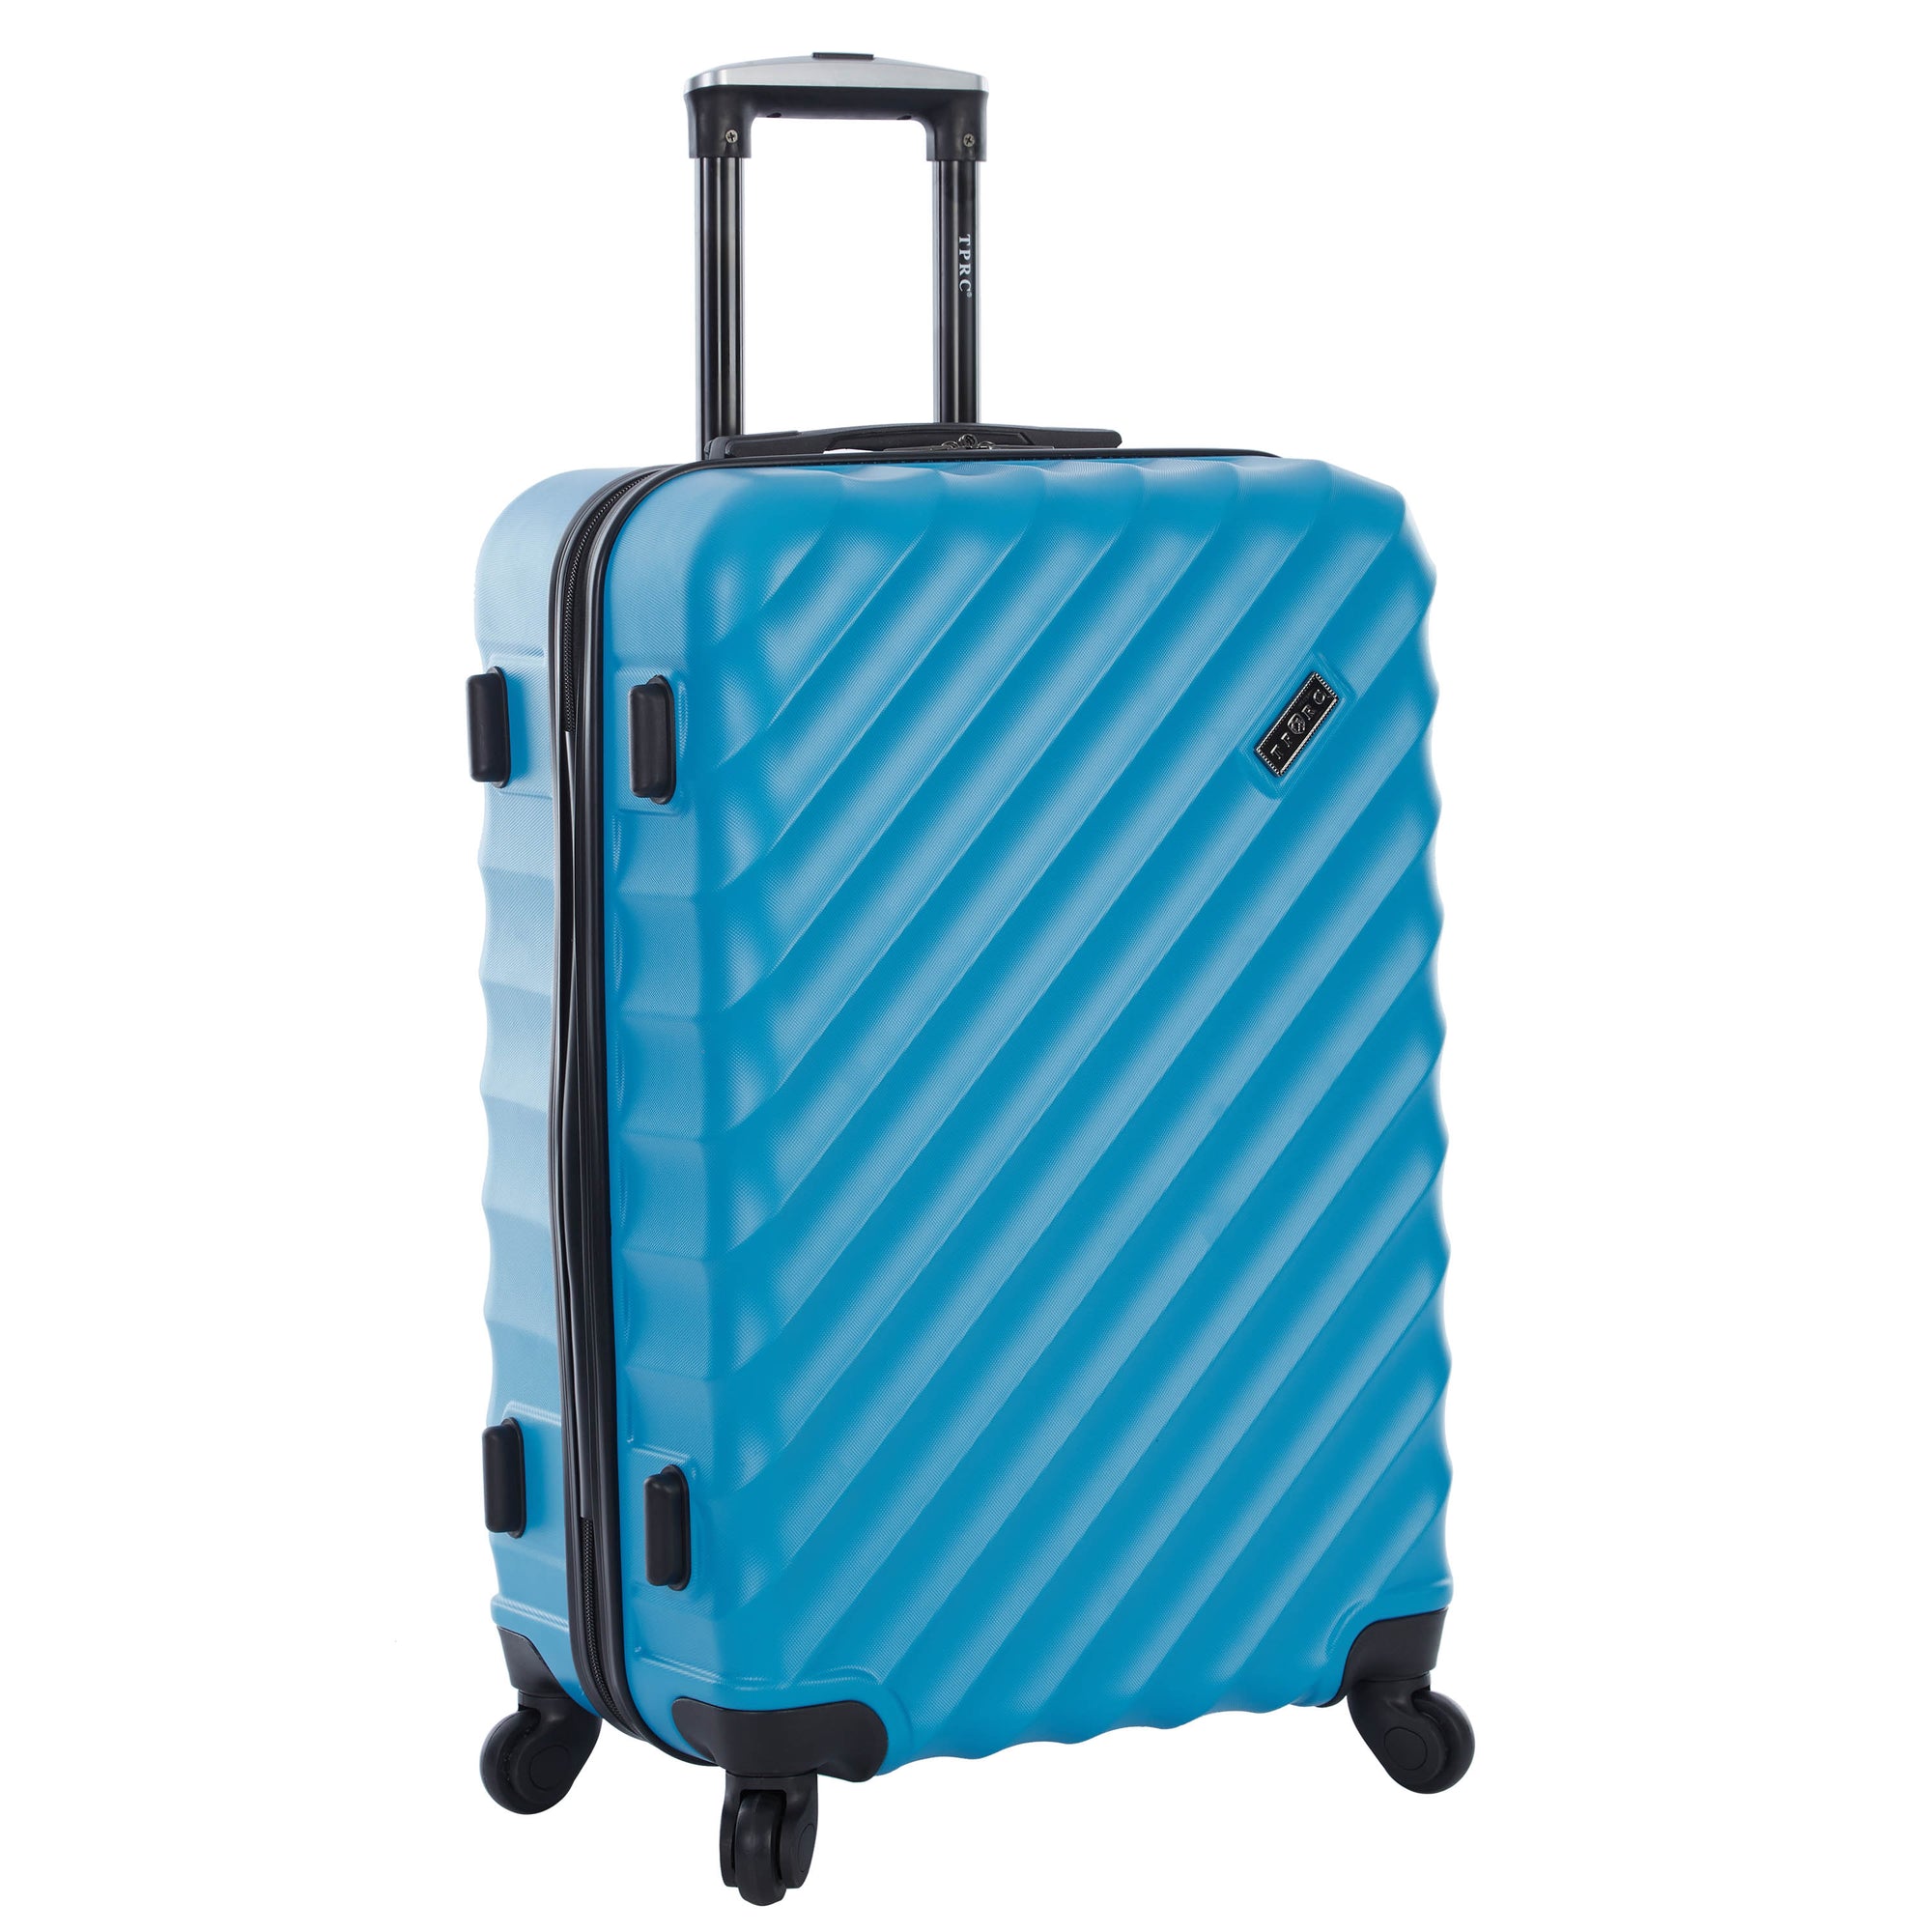 Loola Collection | 3PC Luggage Set